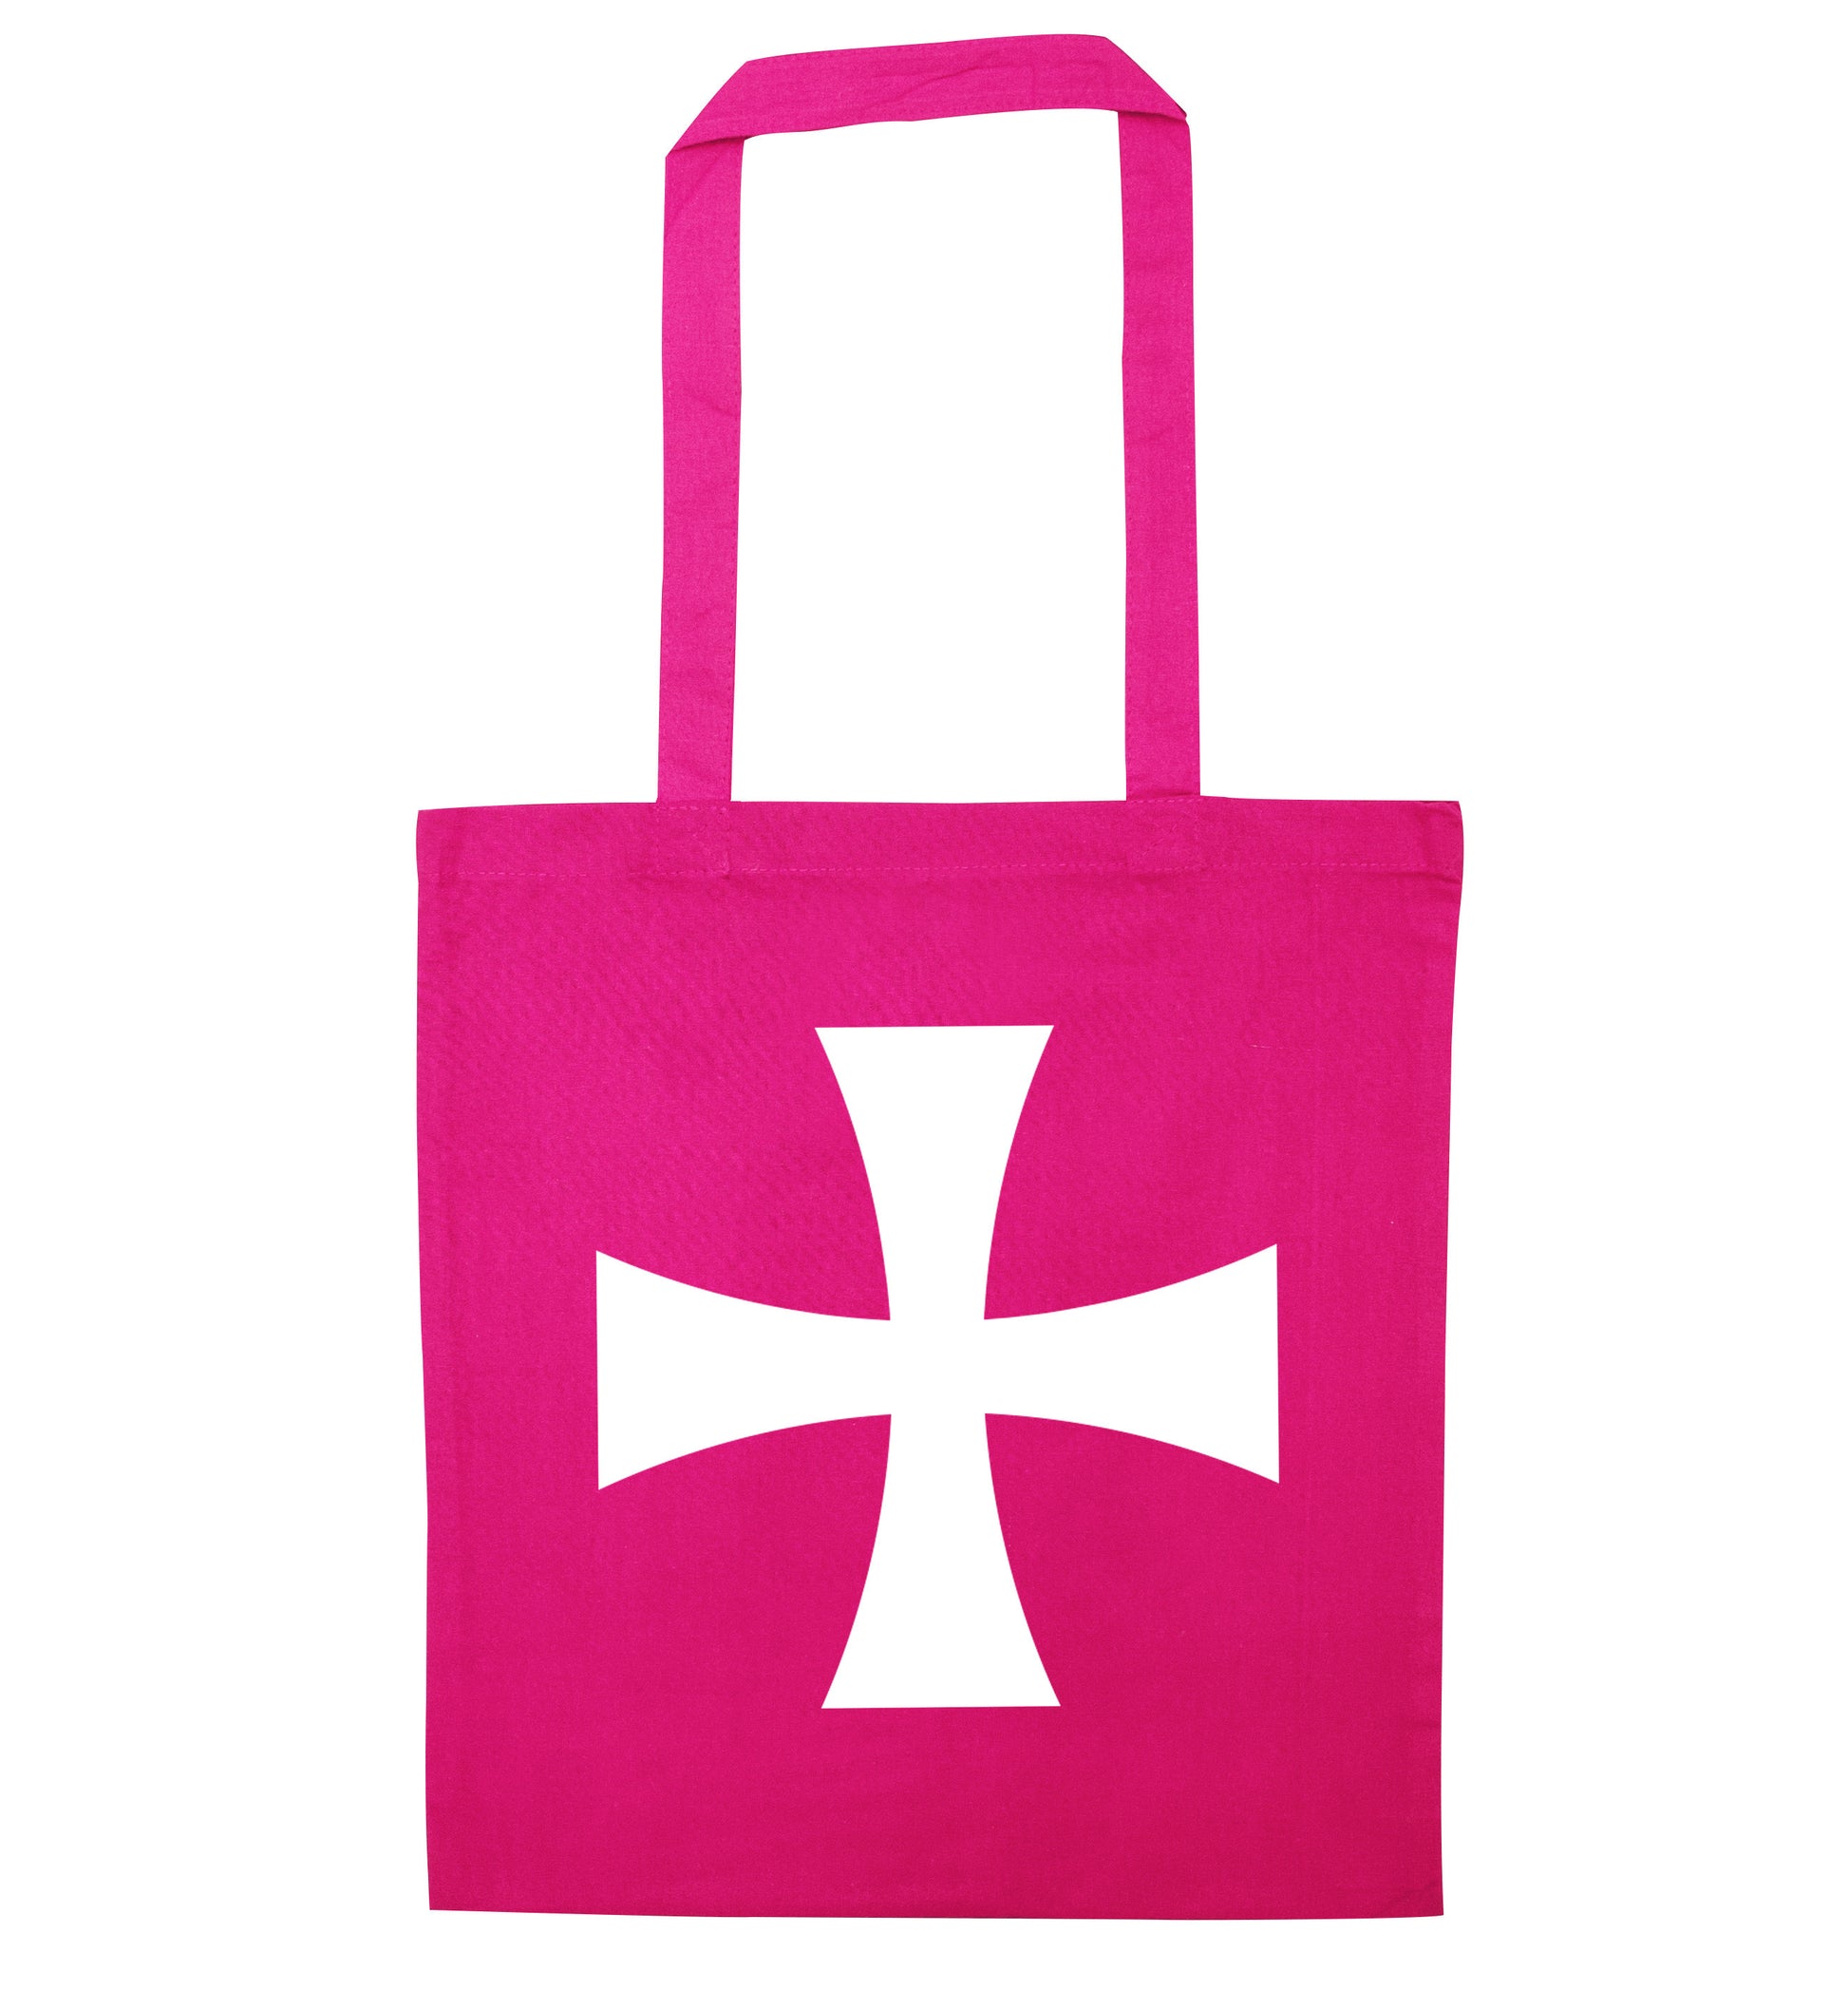 Knights Templar cross pink tote bag